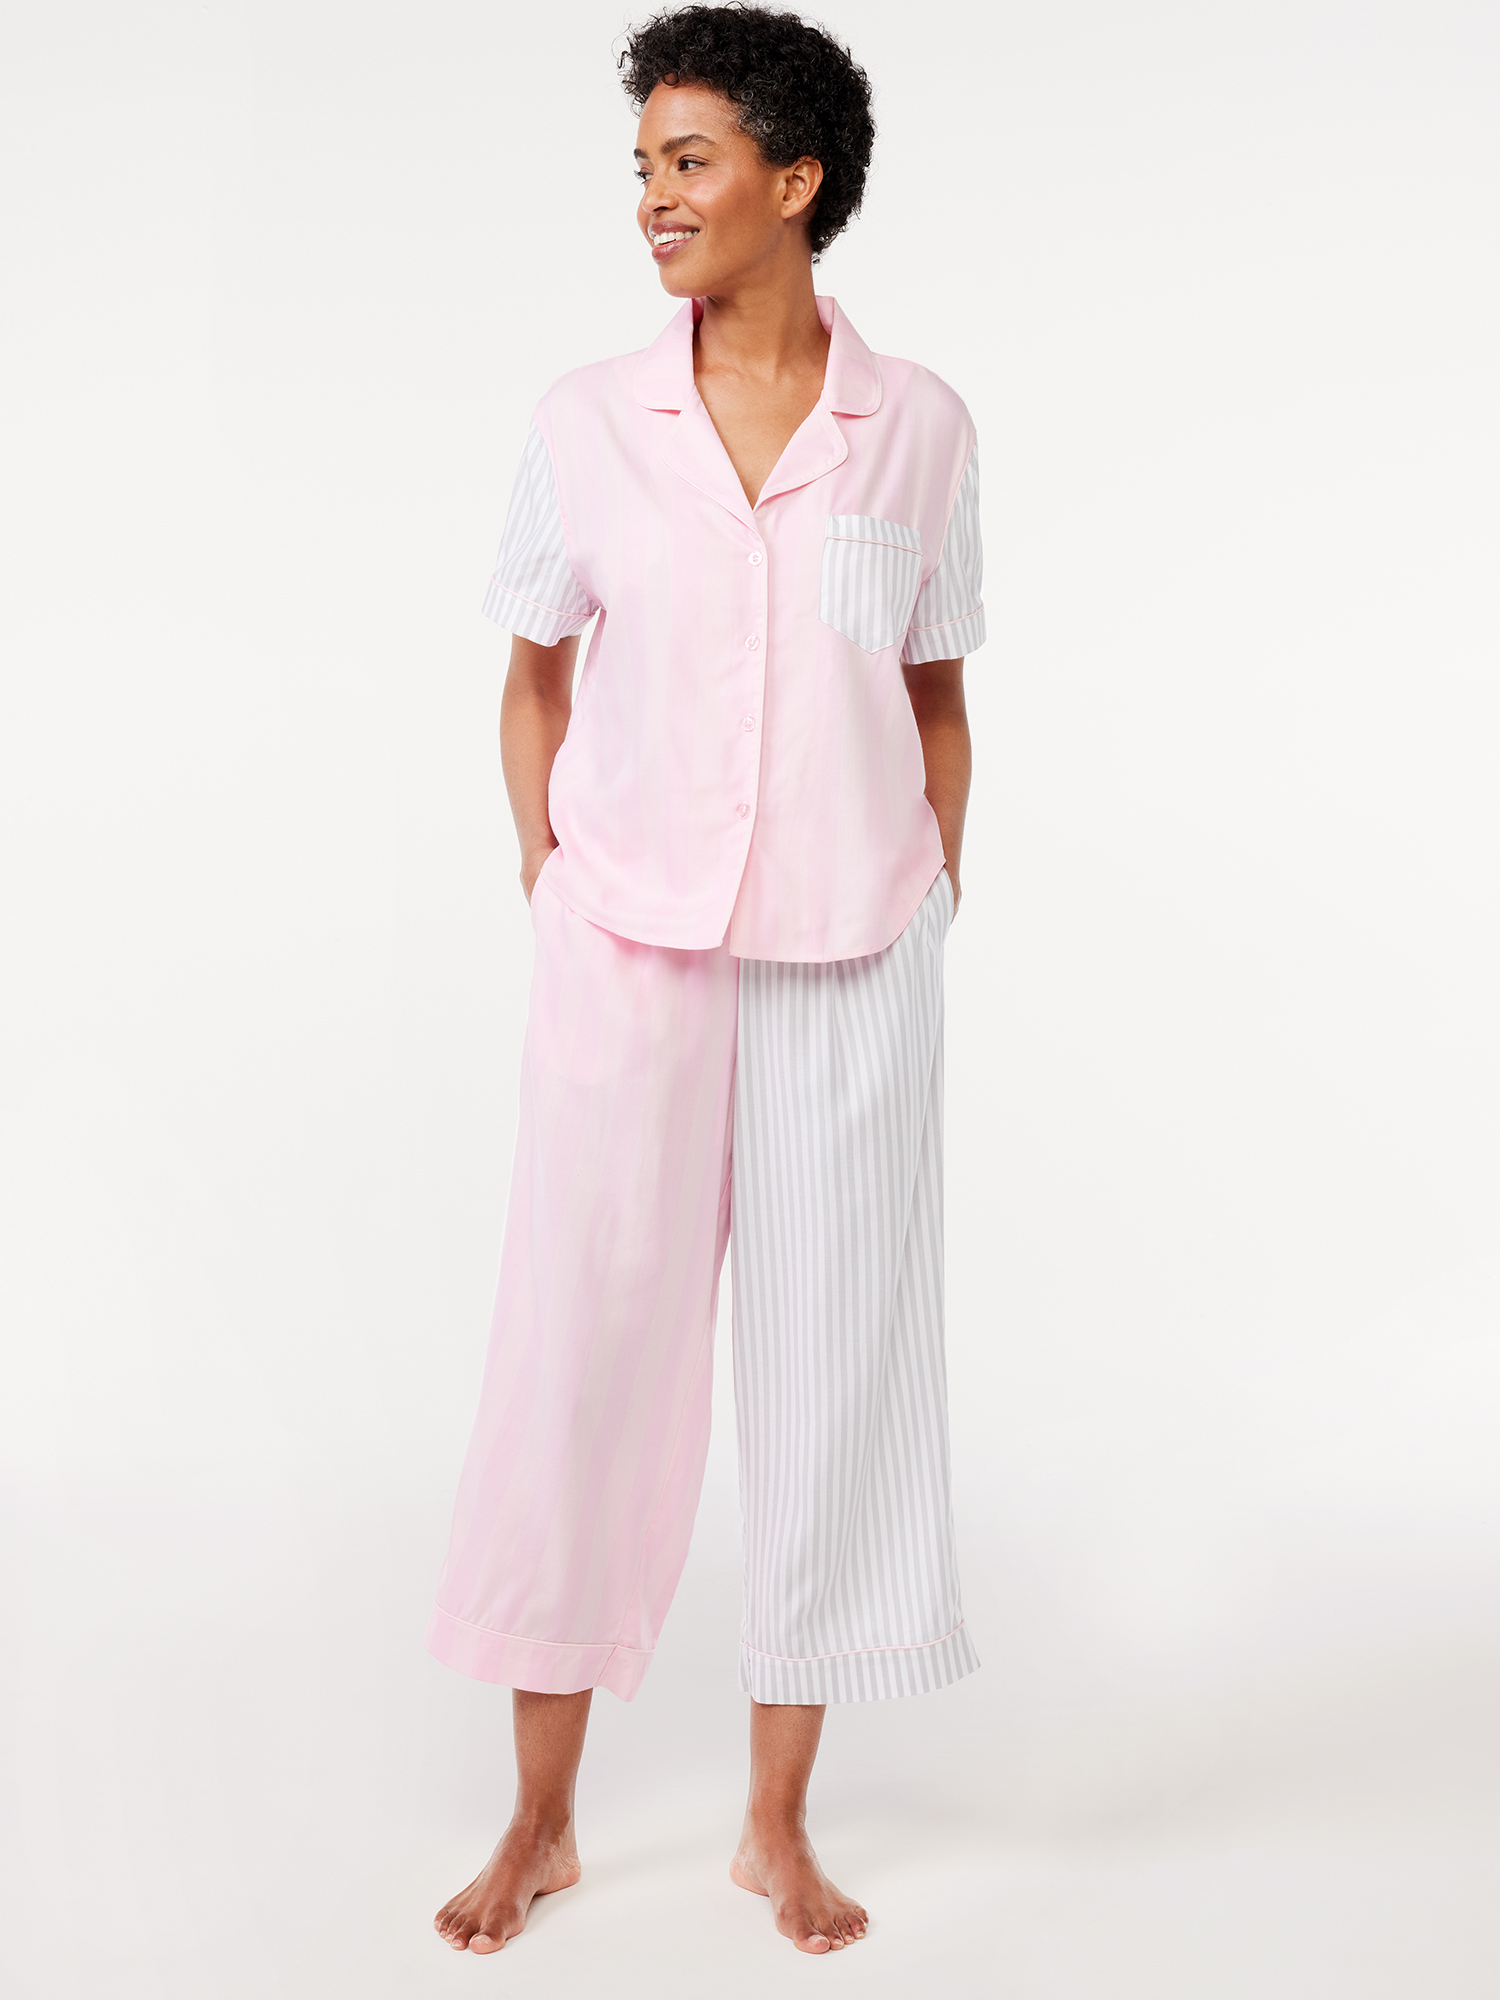 Joyspun Women's Woven Cropped Pajama Pants, Sizes S to 3X - image 2 of 5